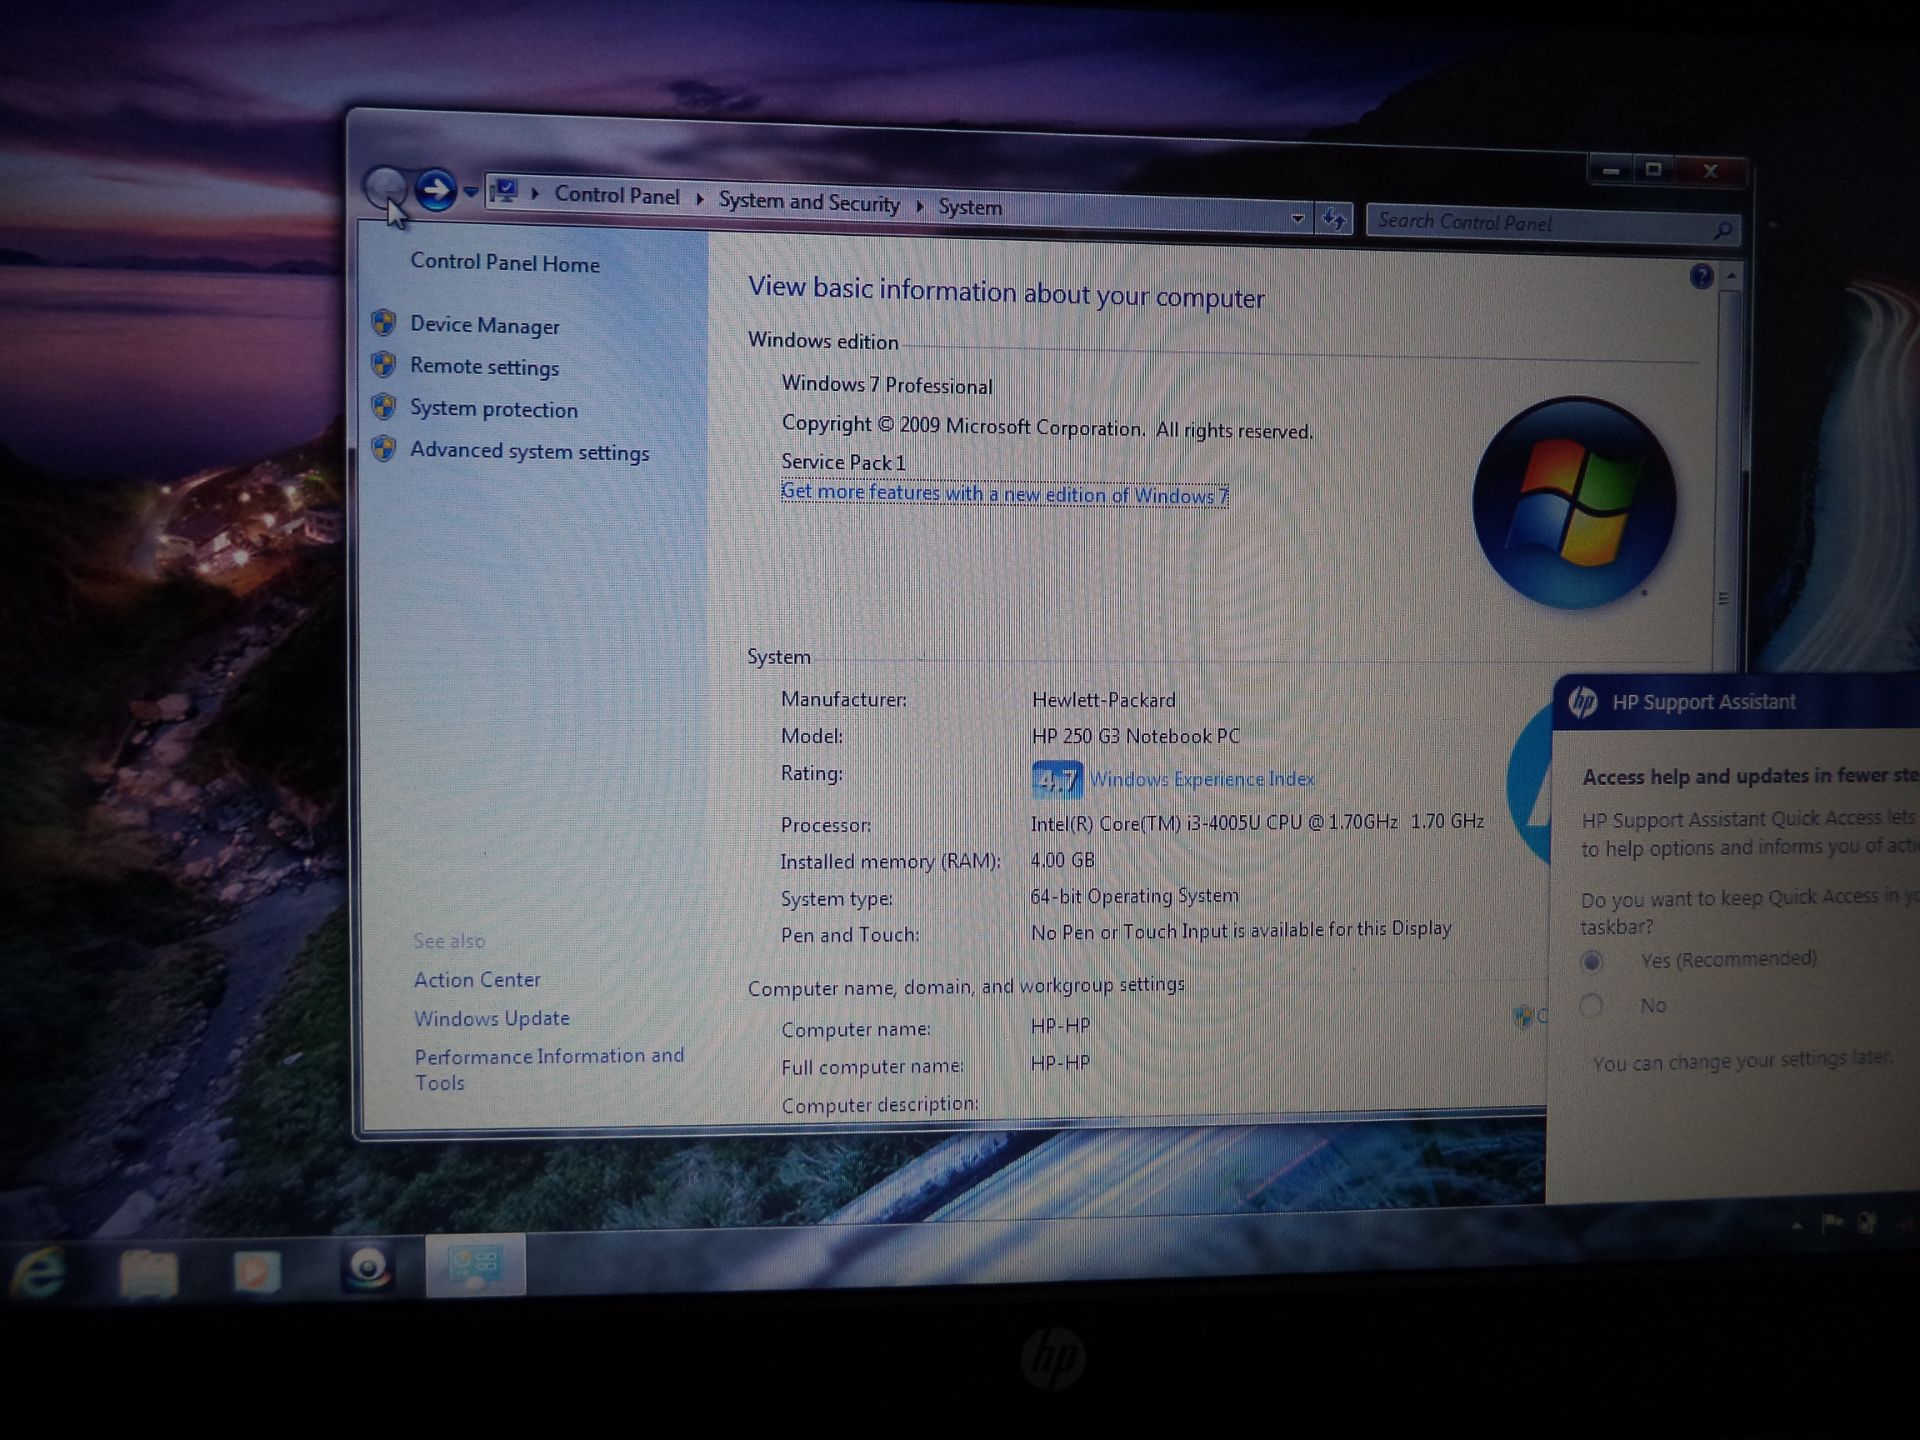 HP ProBook 250 G3 notebook computer with 15.6" widescreen display & built-in webcam, core i3-4005U - Image 3 of 3